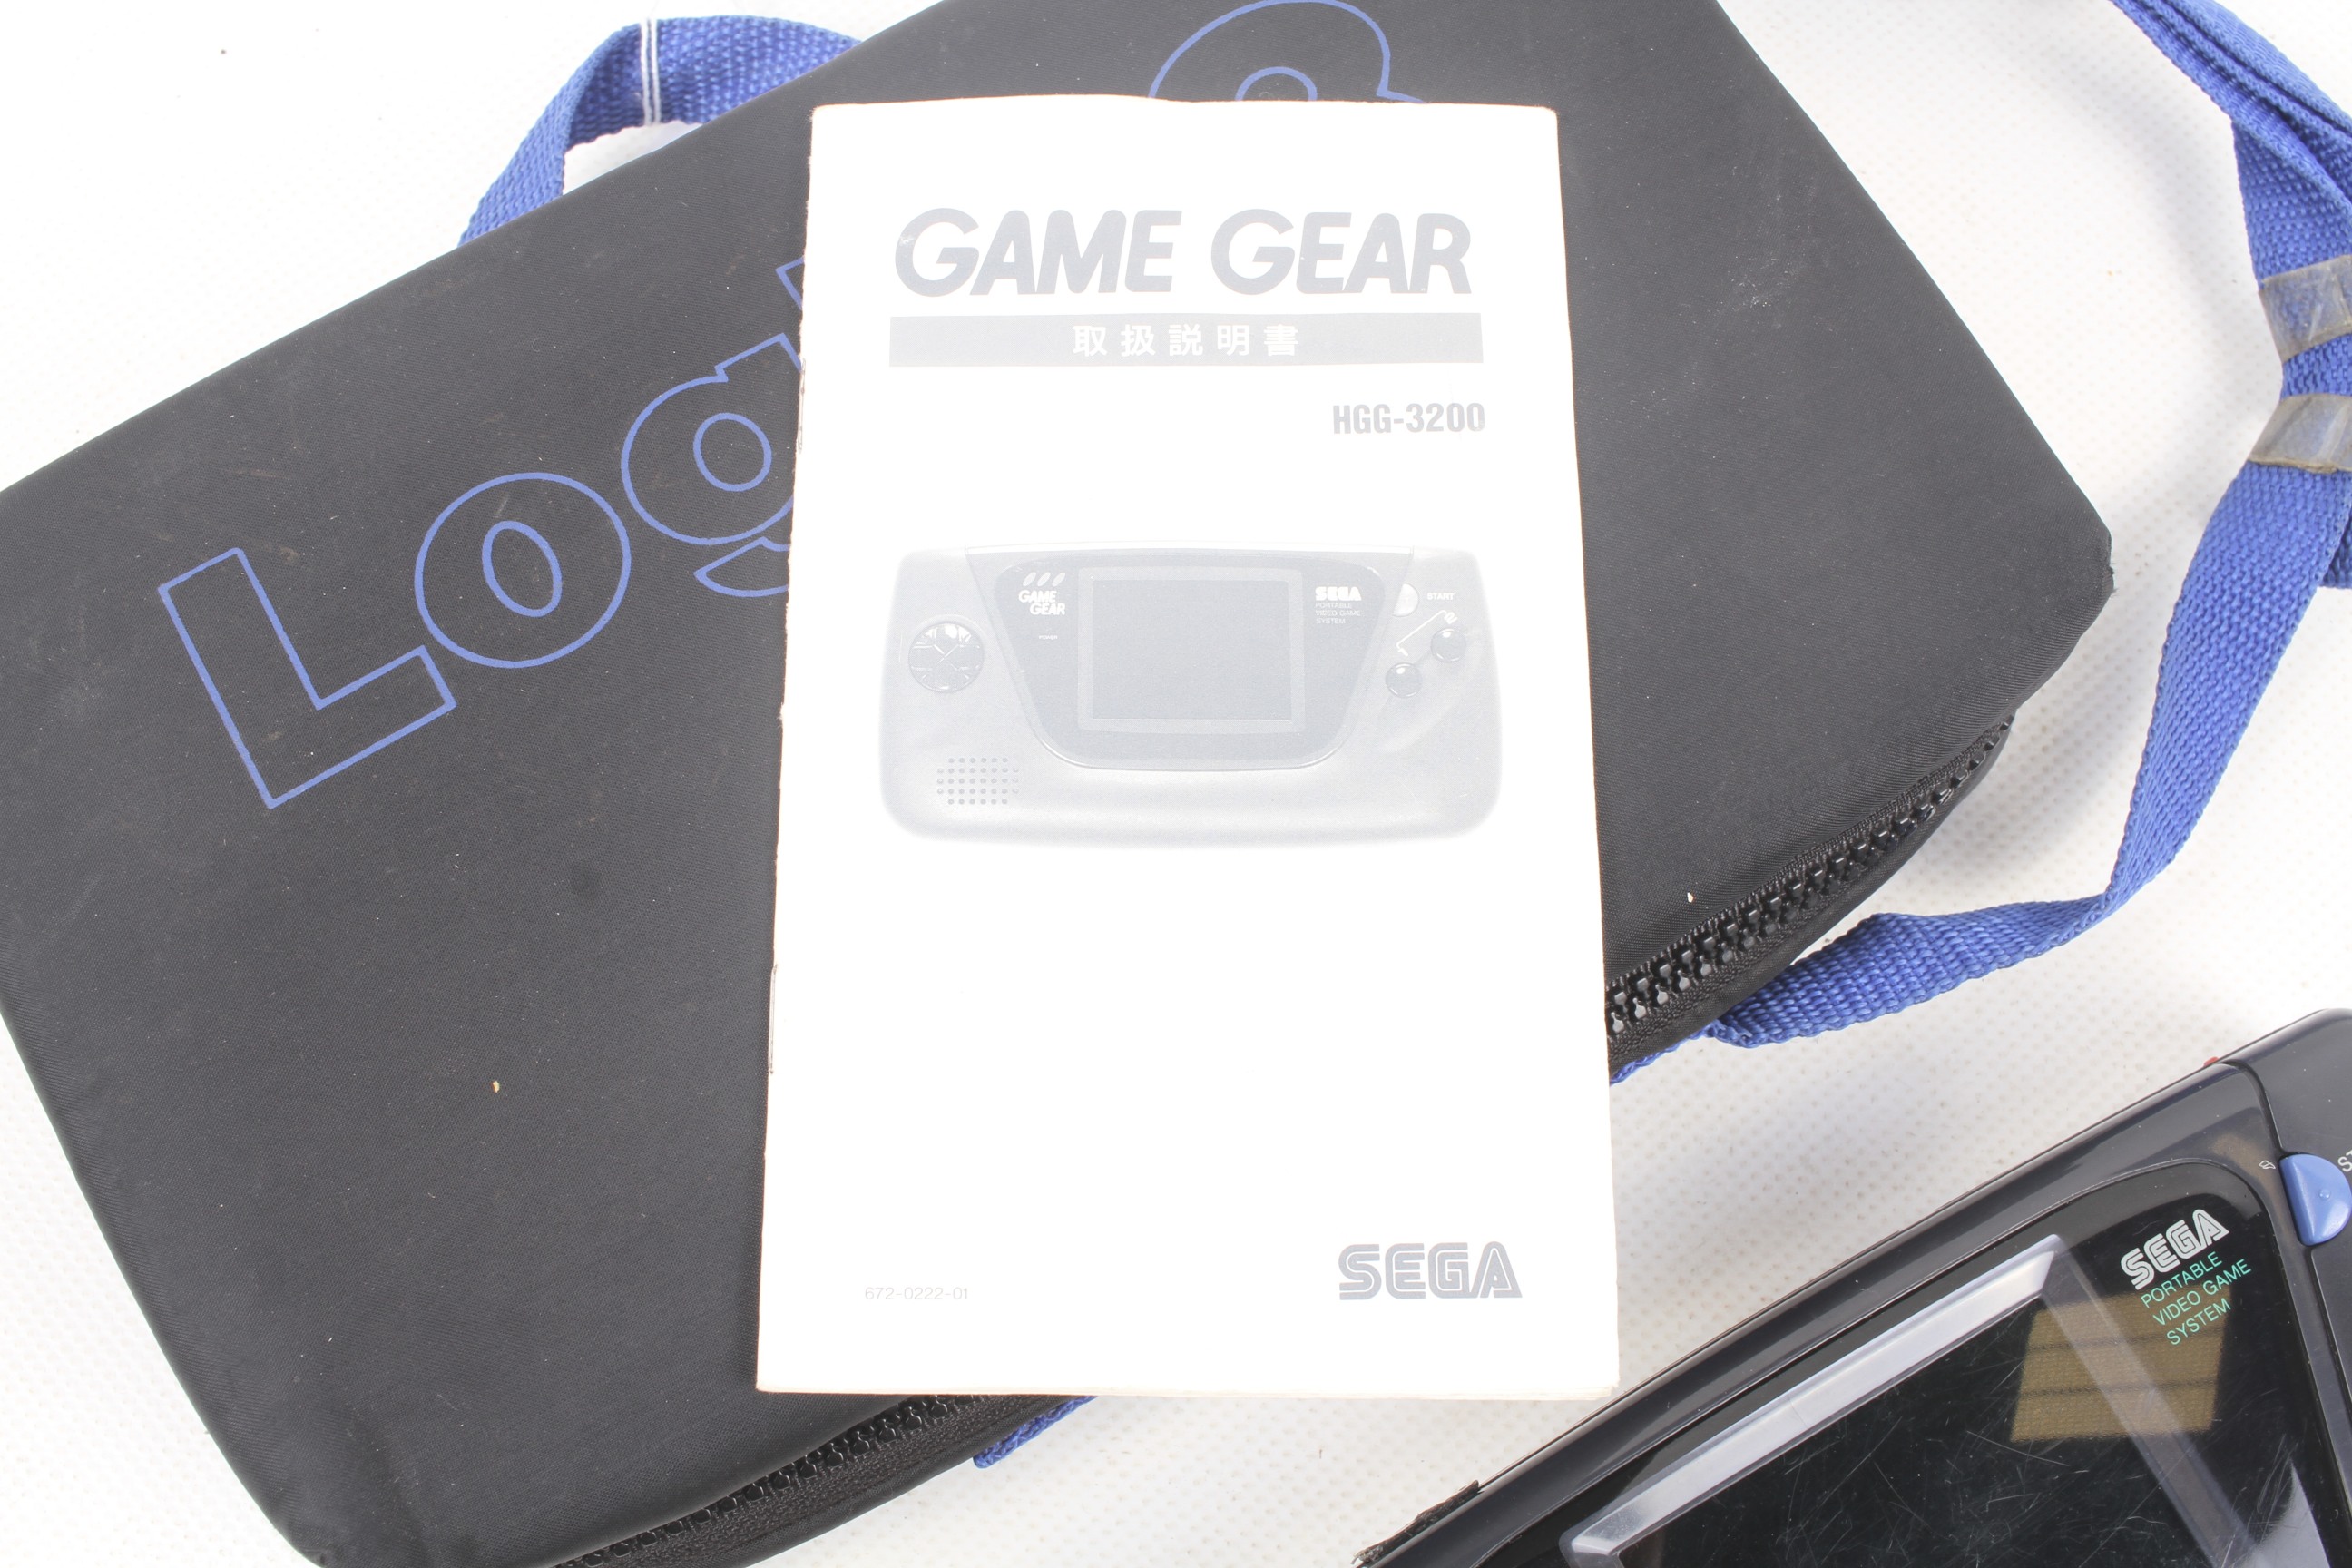 A Sega Gamegear handheld games console. - Image 2 of 2